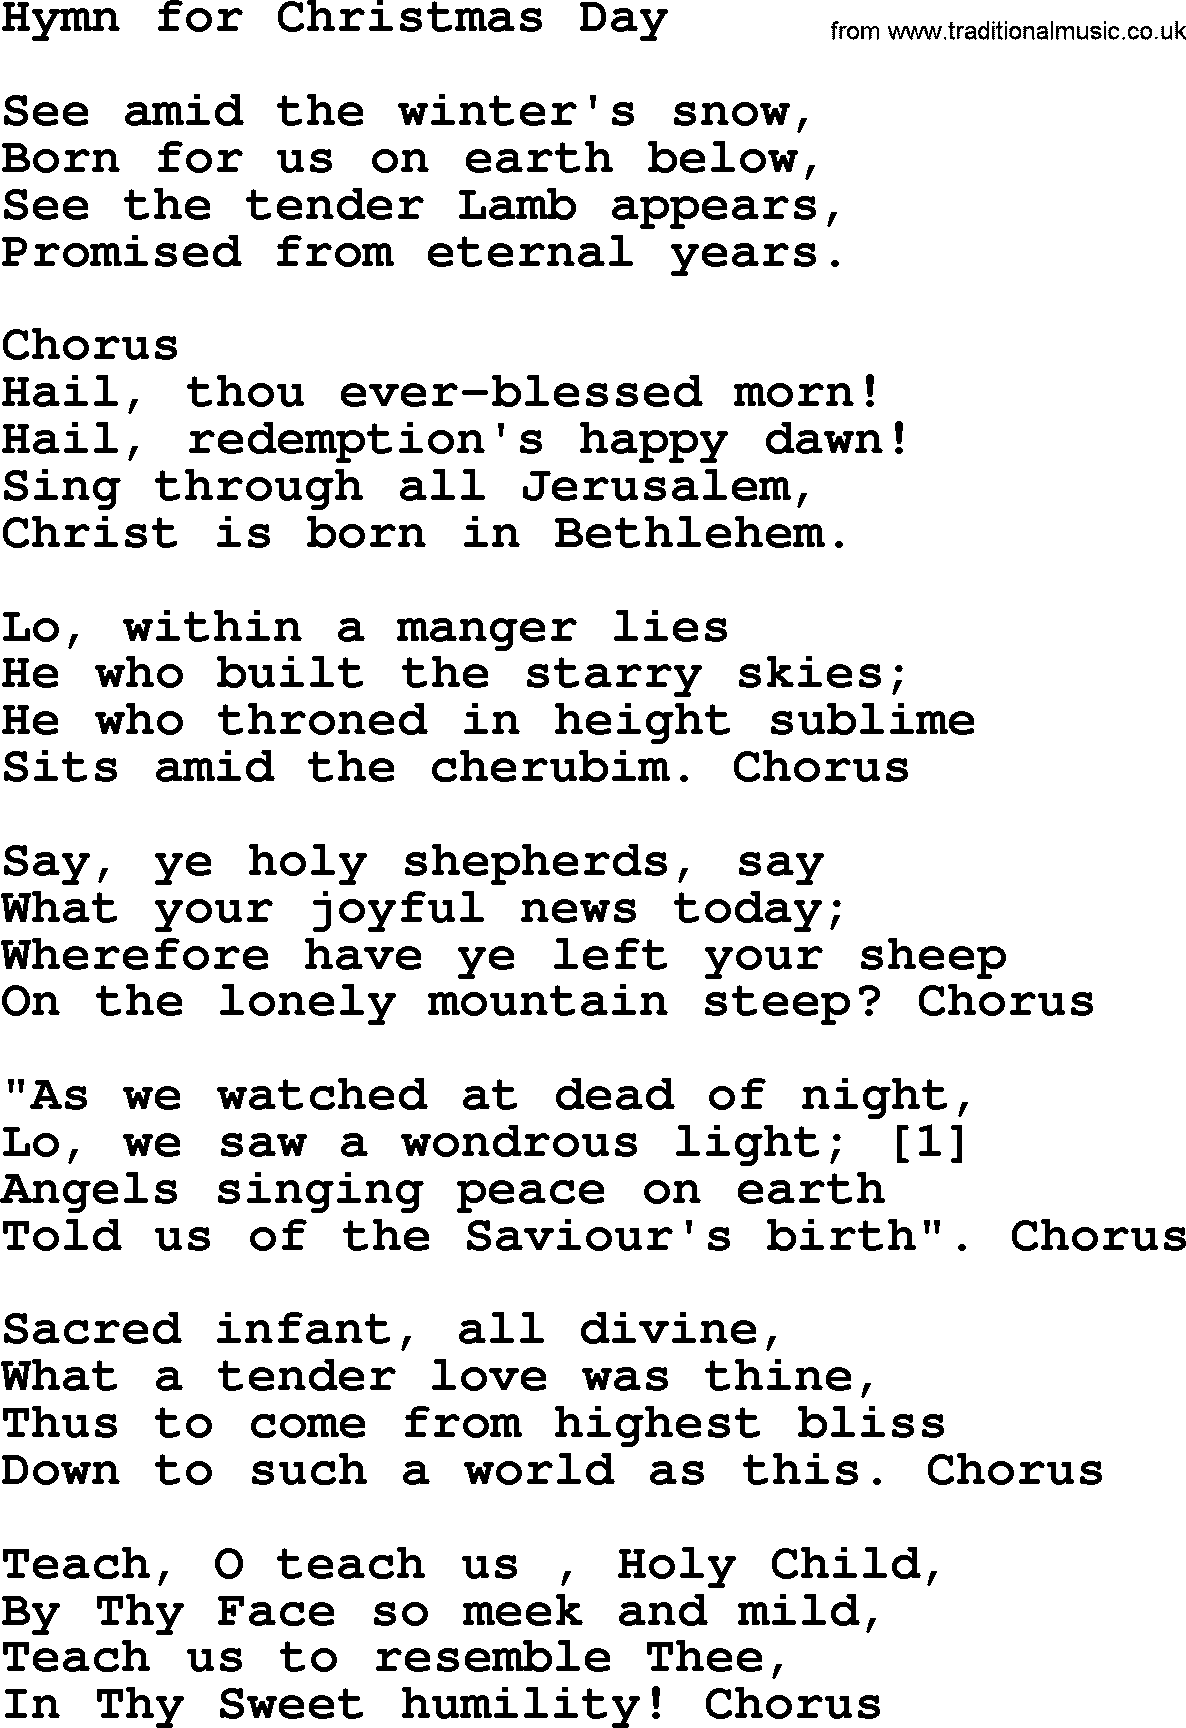 Christmas Hymns, Carols and Songs, title: Hymn For Christmas Day, lyrics with PDF